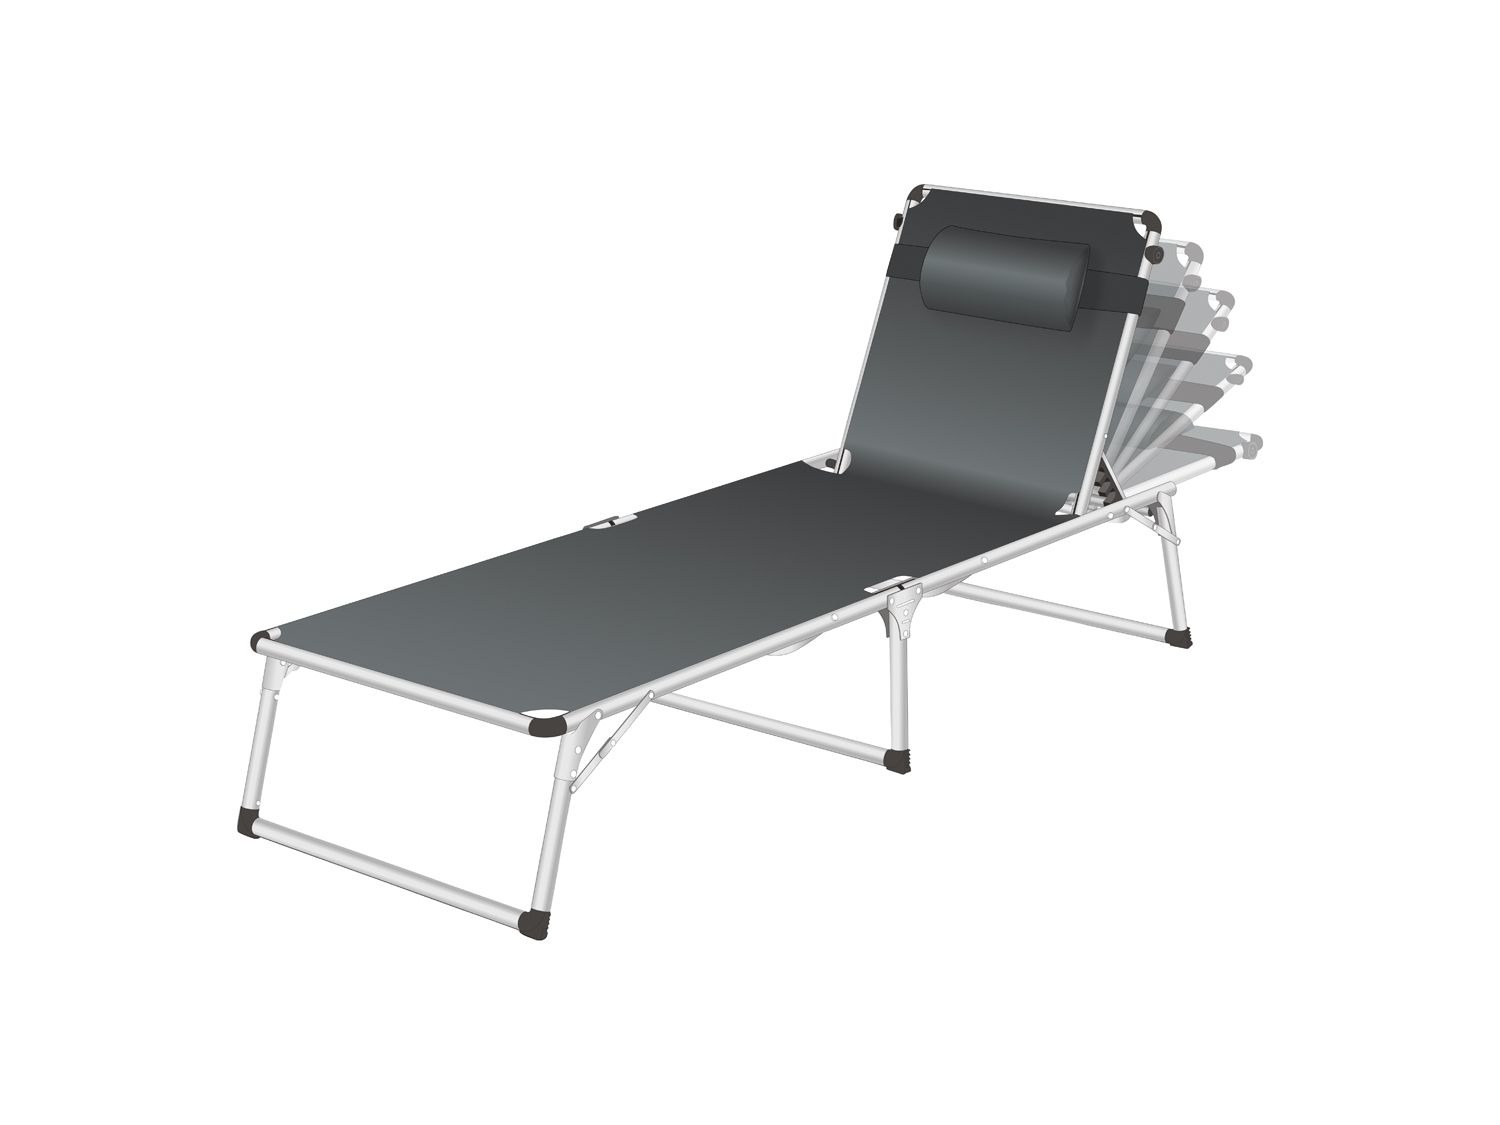 Edele Verlichten Stimulans florabest Aluminium ligstoel met zonnedak grijs | LIDL